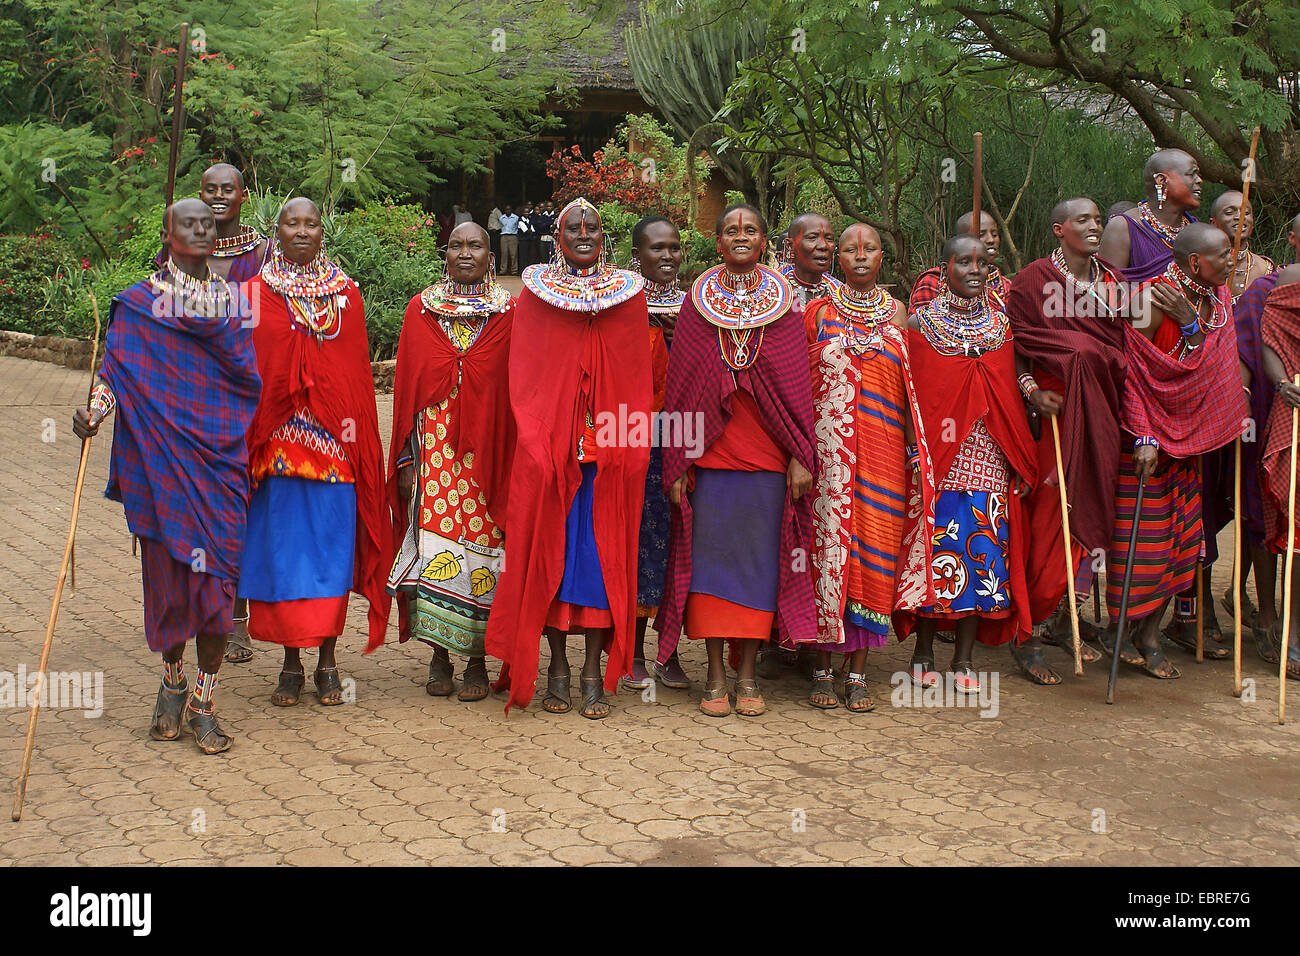 massai group with traditional clothing, Kenya, Masai Mara Stock Photo